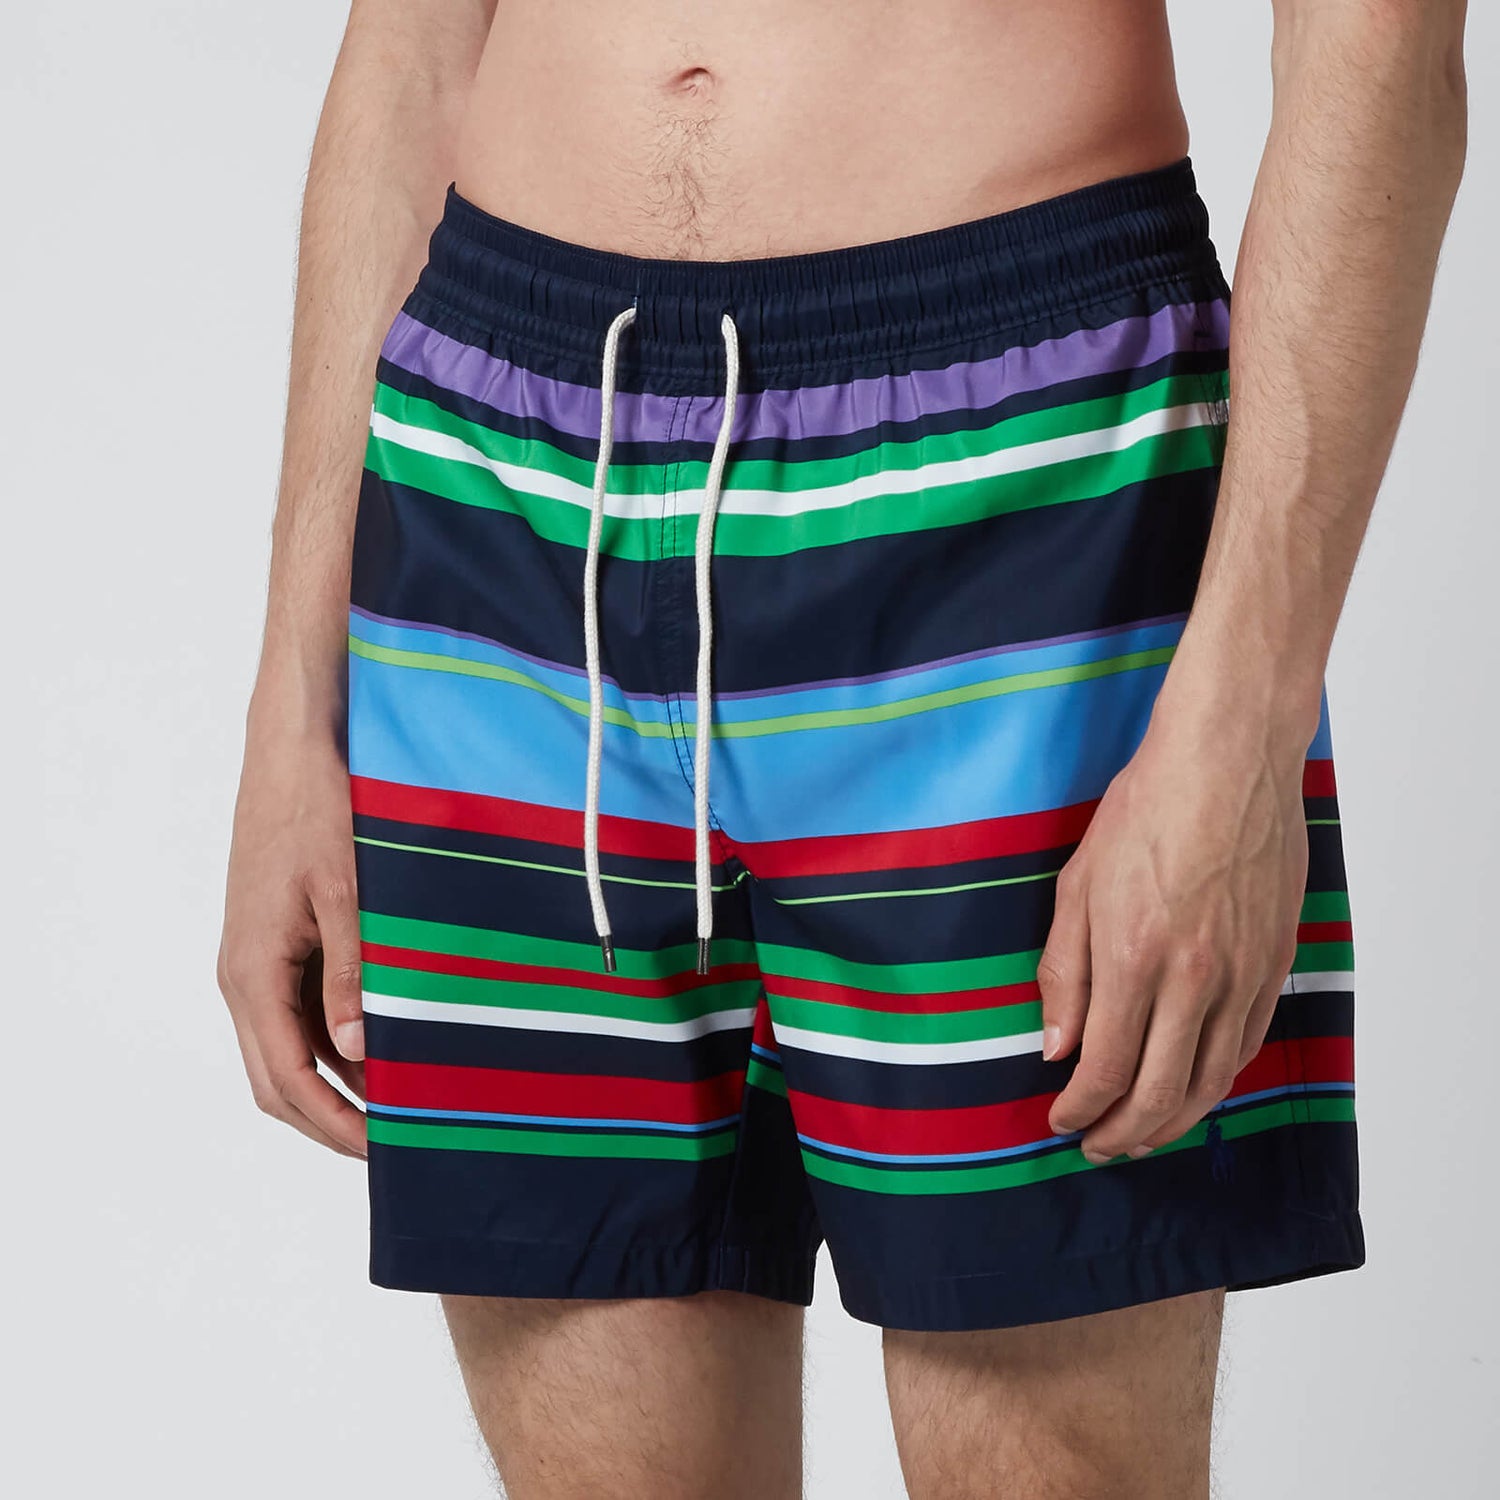 Polo Ralph Lauren Men's Traveler Swim Shorts - Bermuda Multi Stripe